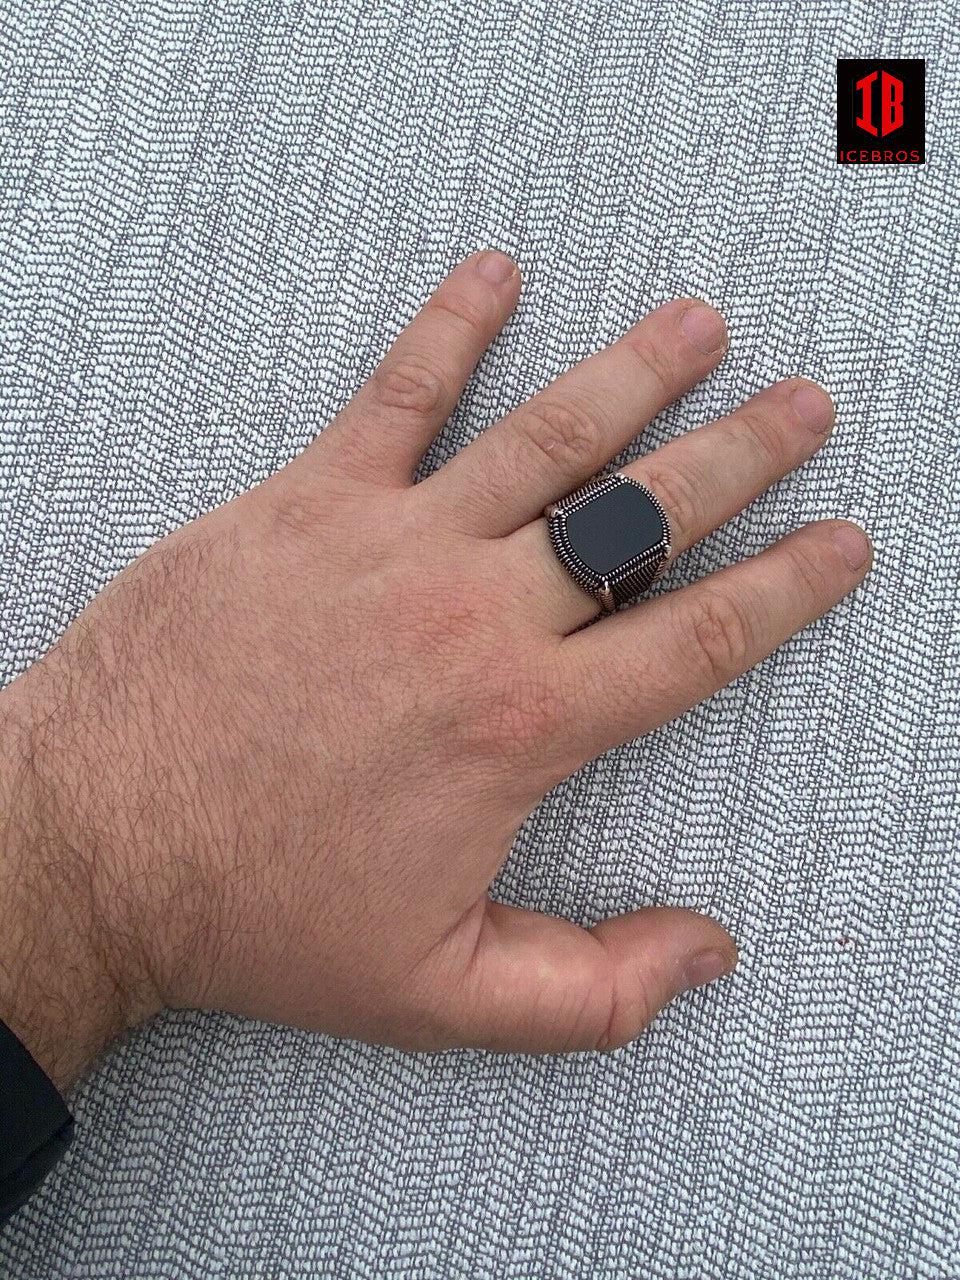 Men's Vermeil 925 Sterling Silver Black Onyx LARGE Ring Sz 7-13 ~16 Grams